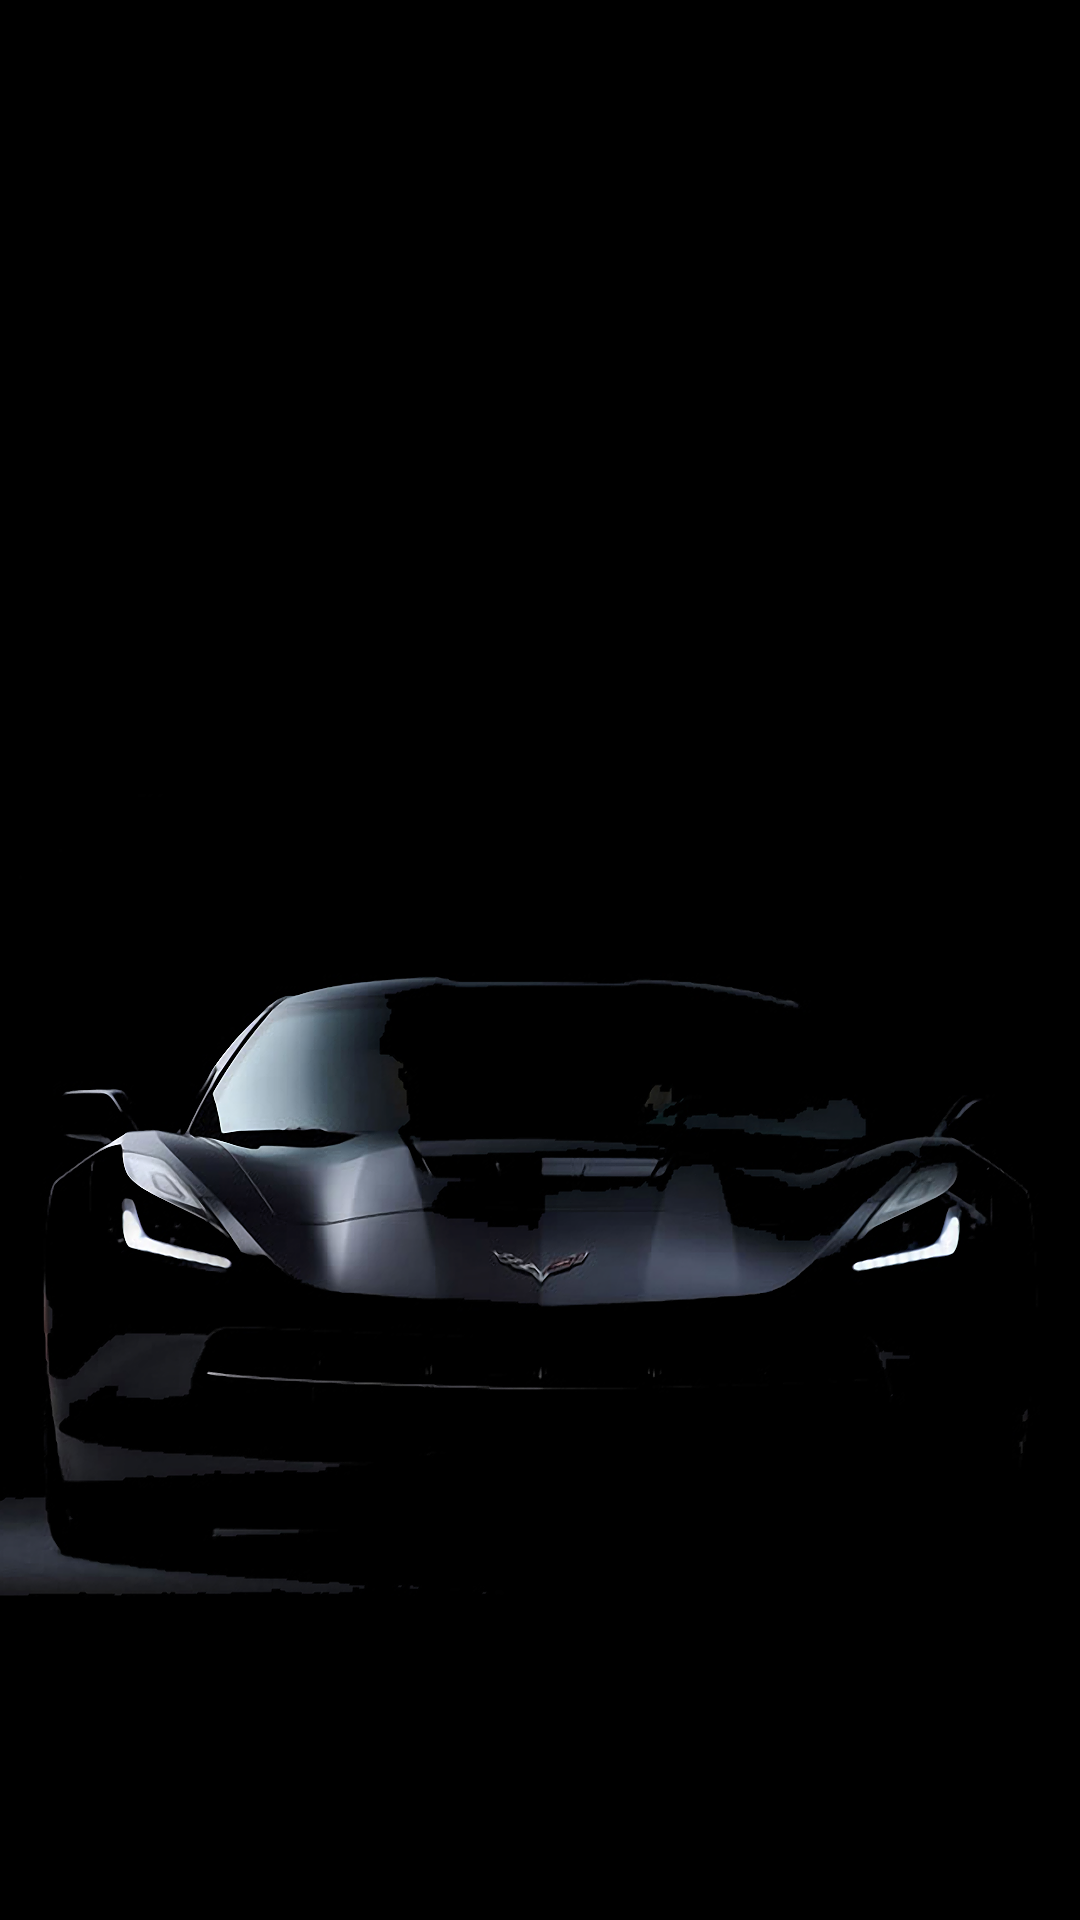 C7 Corvette Stingray Dark iPhone Wallpaper